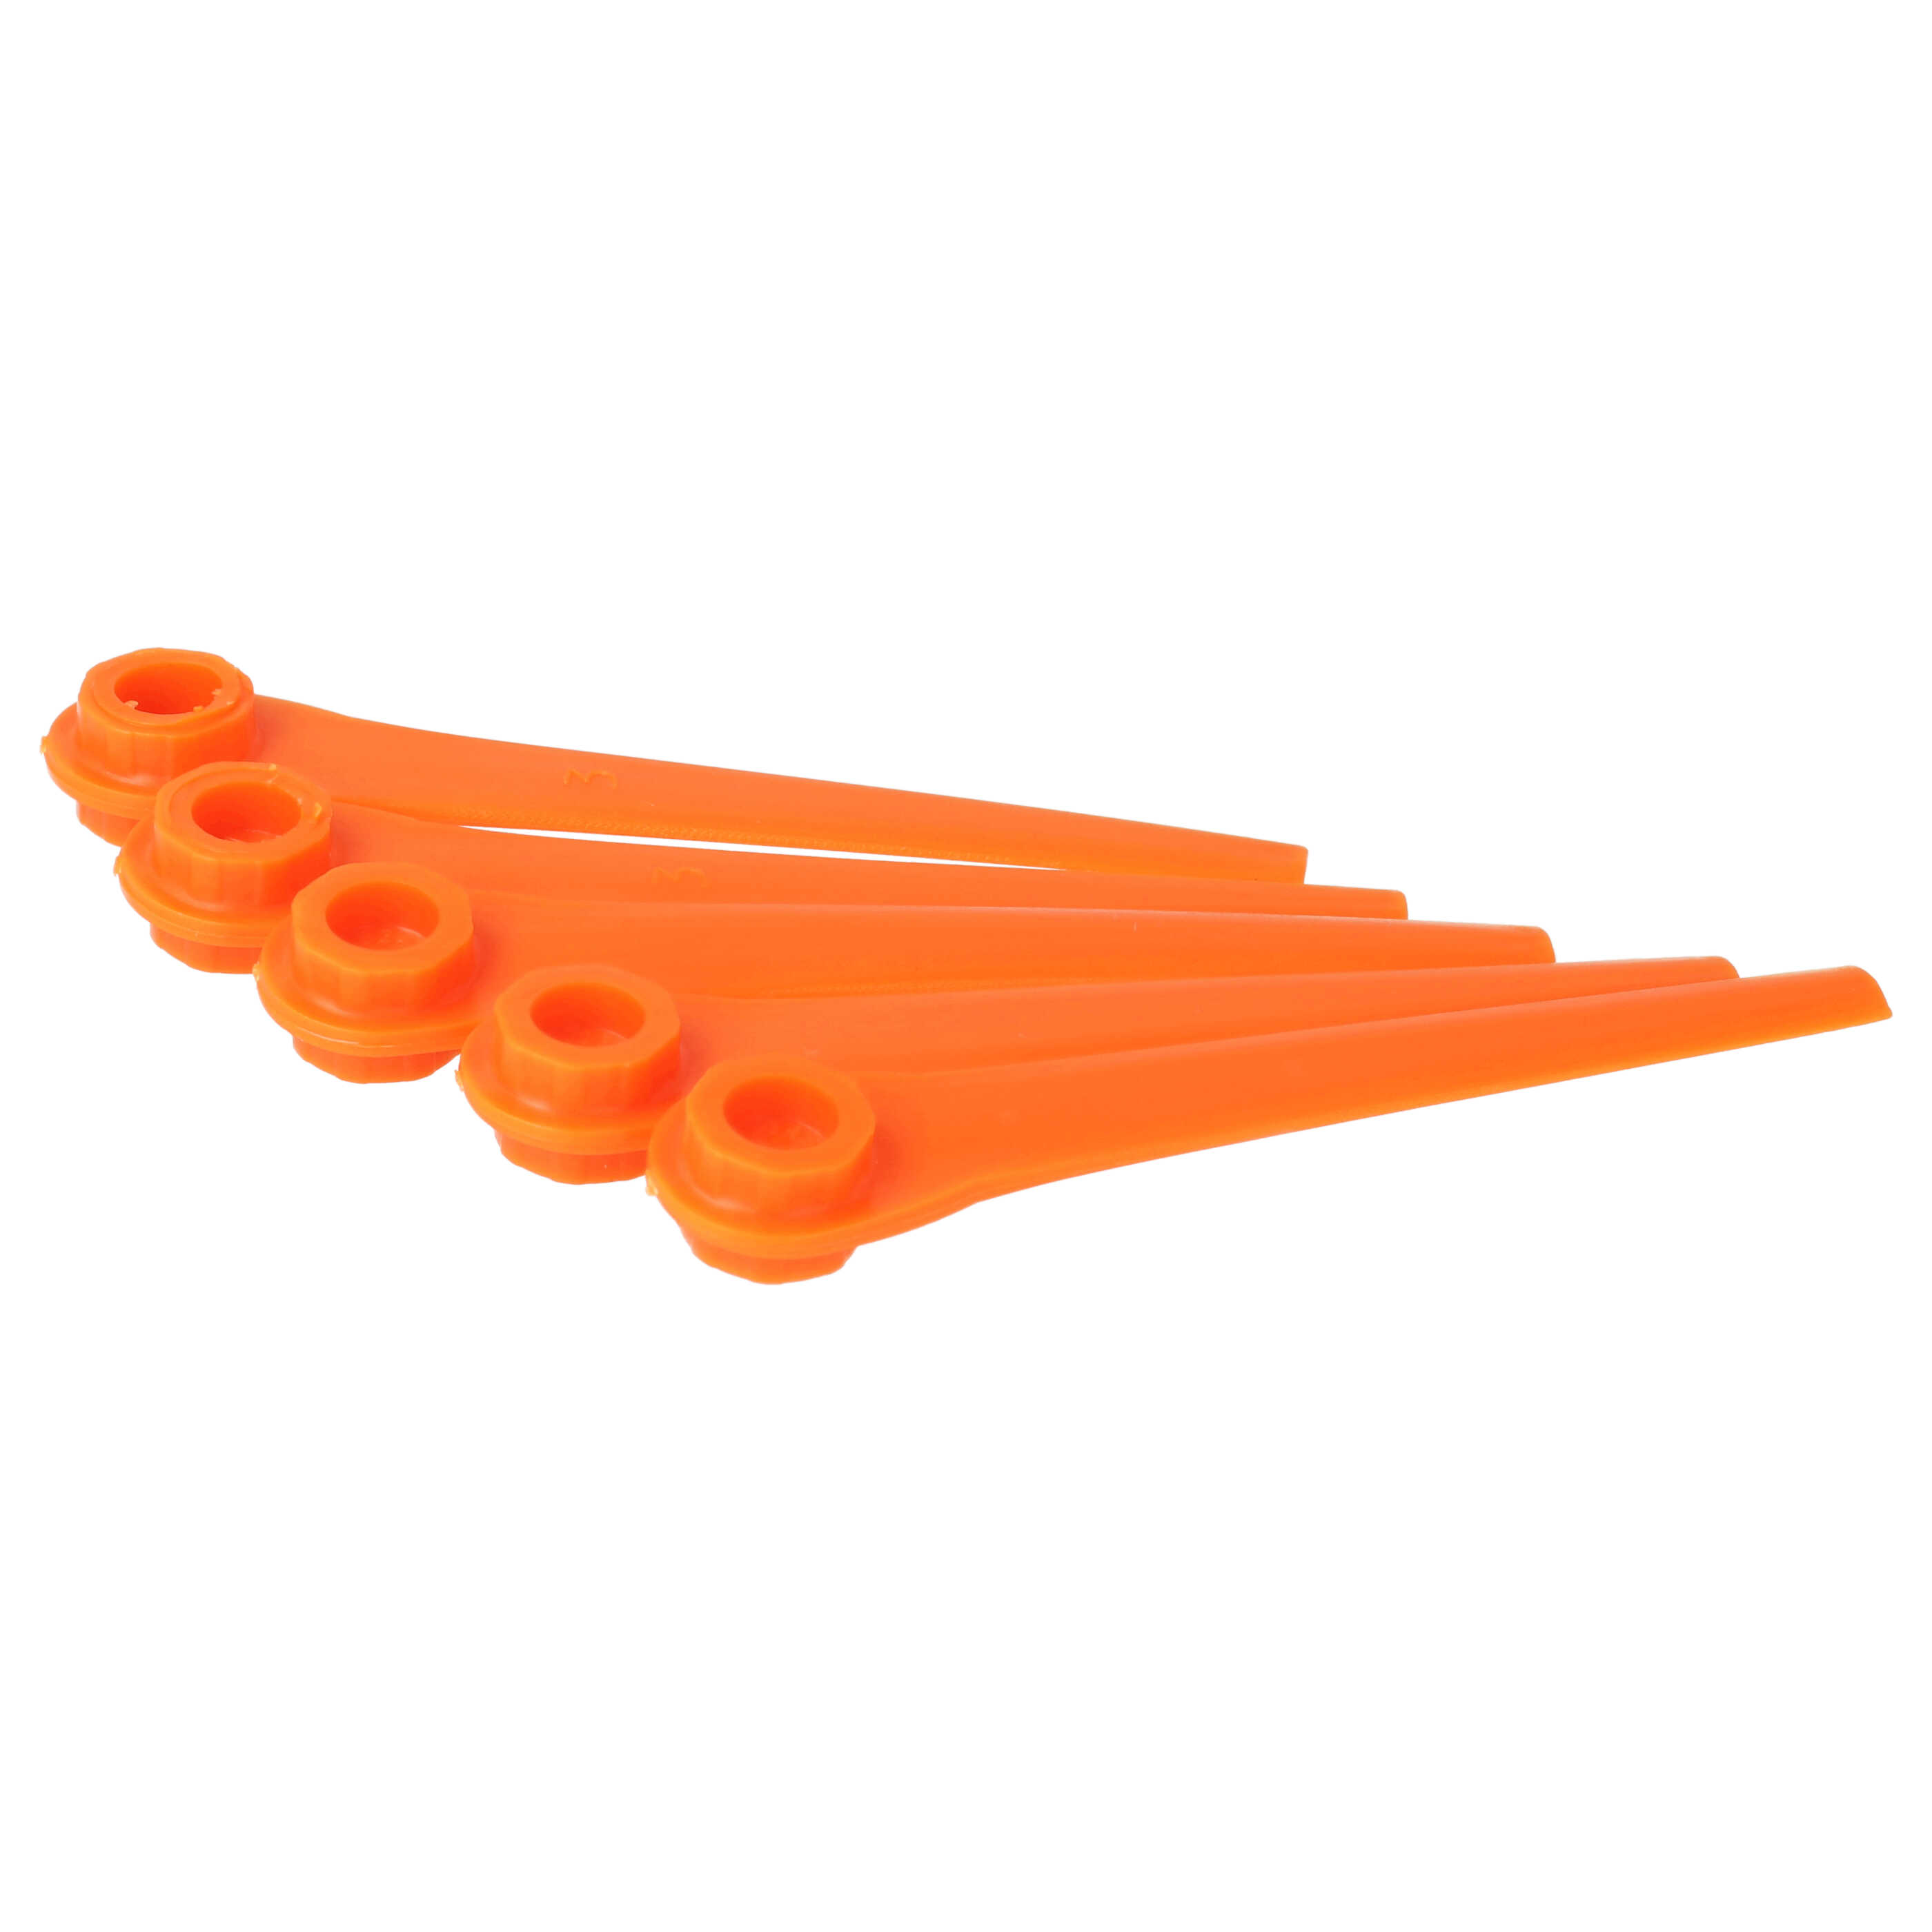 20x Exchange Blade replaces Gardena RotorCut 5368-20 for Cordless Strimmer - plastic, orange